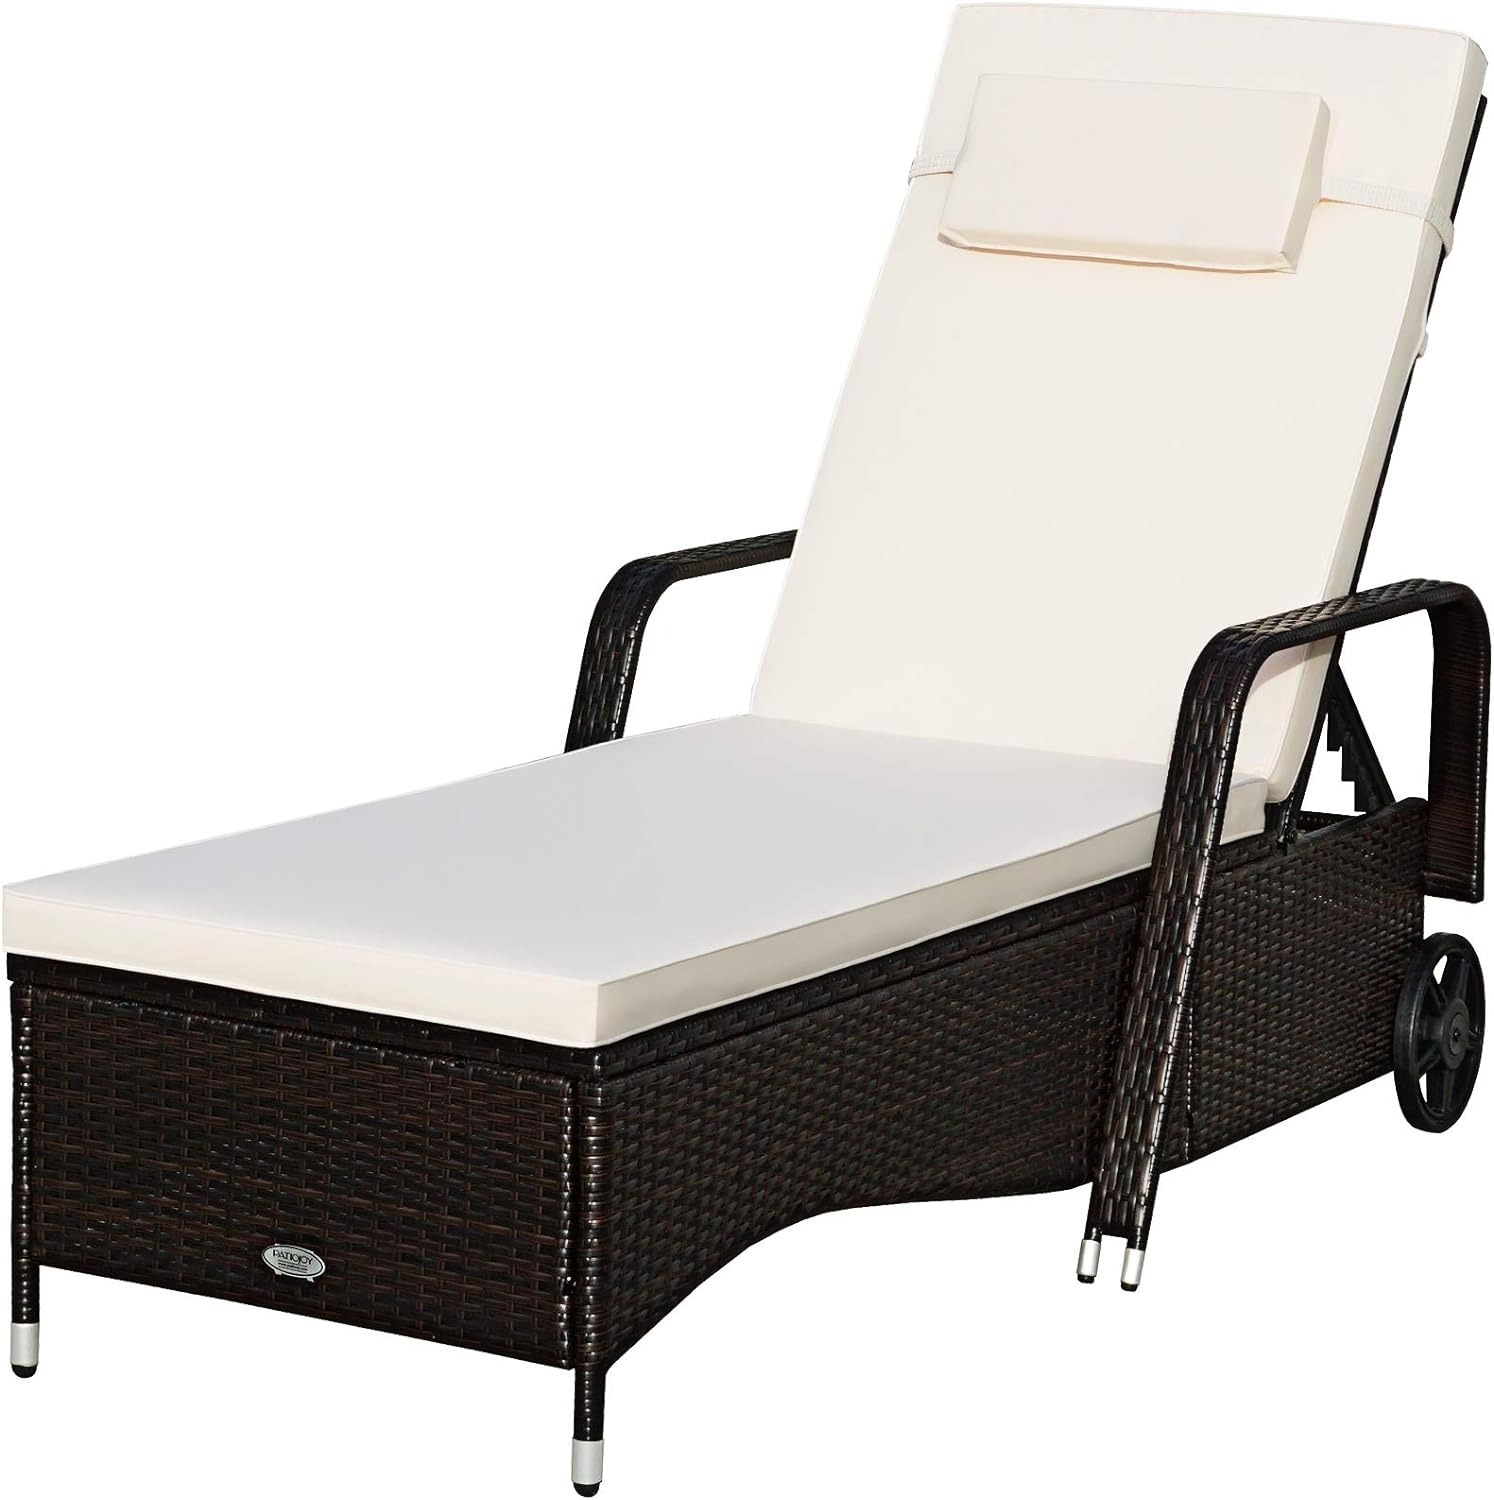 Tangkula Adjustable Outdoor Rattan Patio Lounge Chair w/ Steel Frame, Cushion, Head Pillow & Wheels $116 + Free Shipping